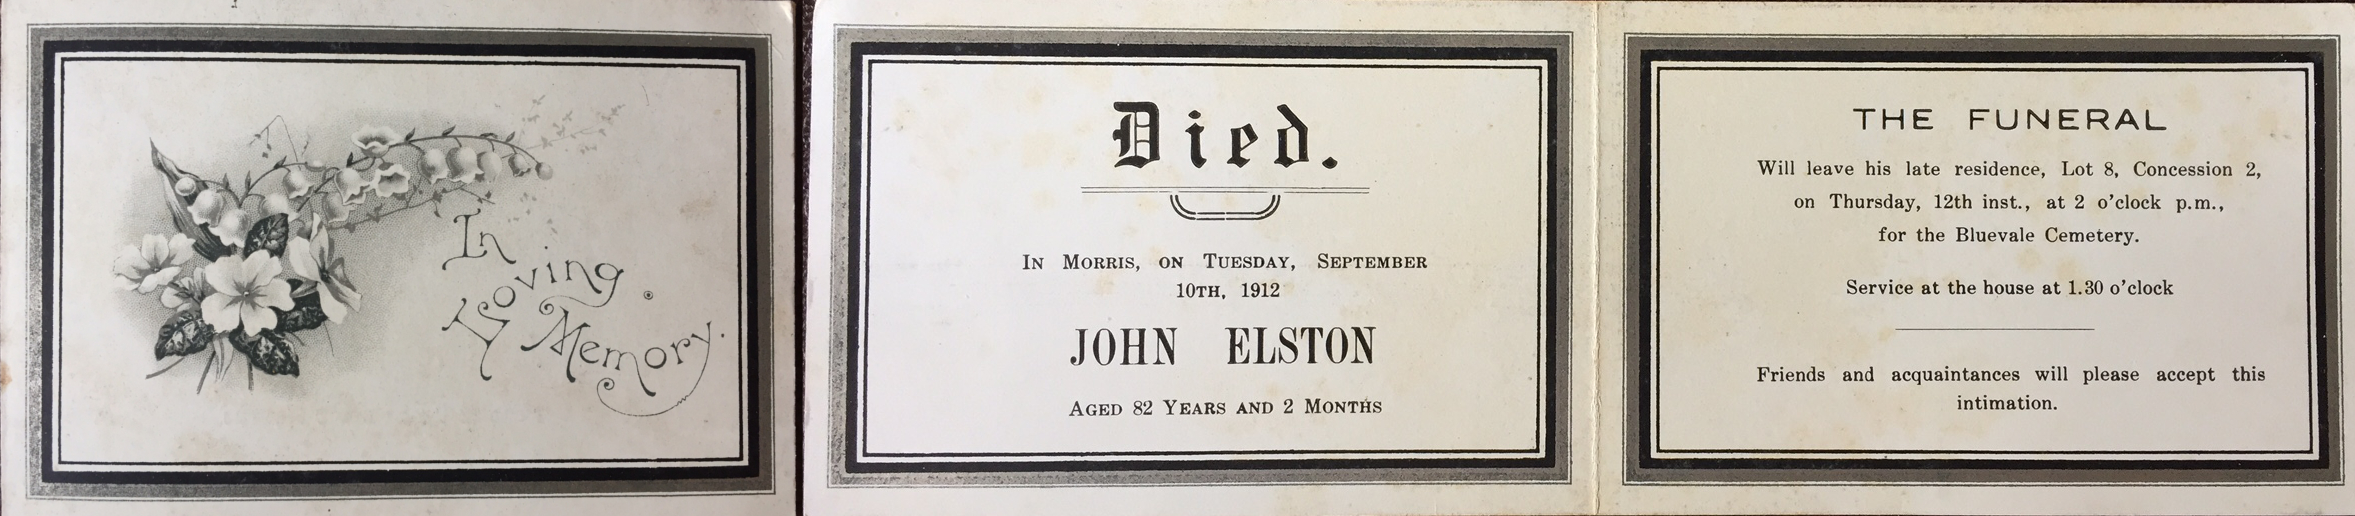 Elston_John_1912_funeralcard